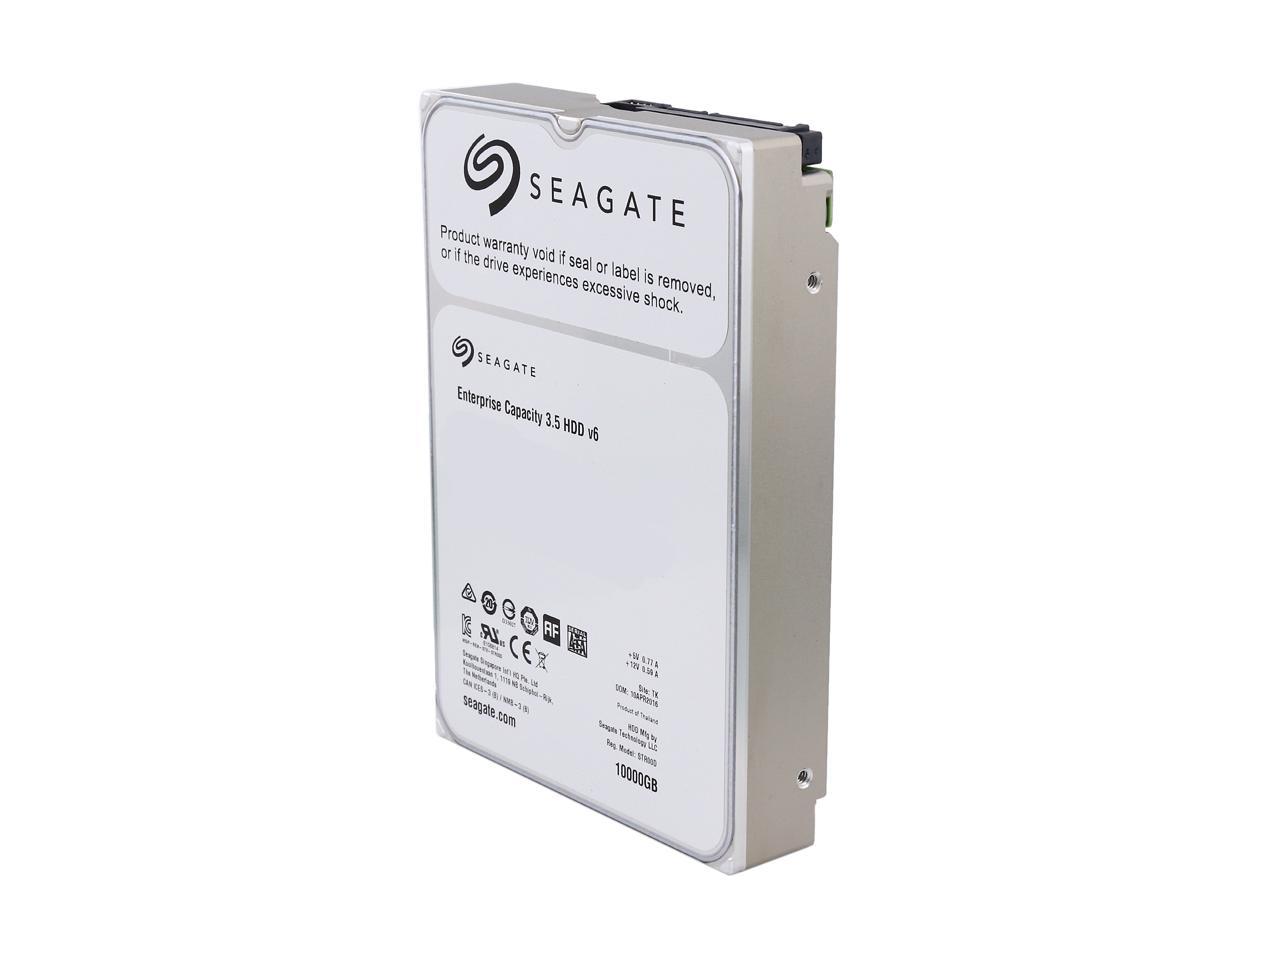 Seagate Exos Enterprise 3.5'' 10TB 7200 RPM Hard Drive - Newegg.com